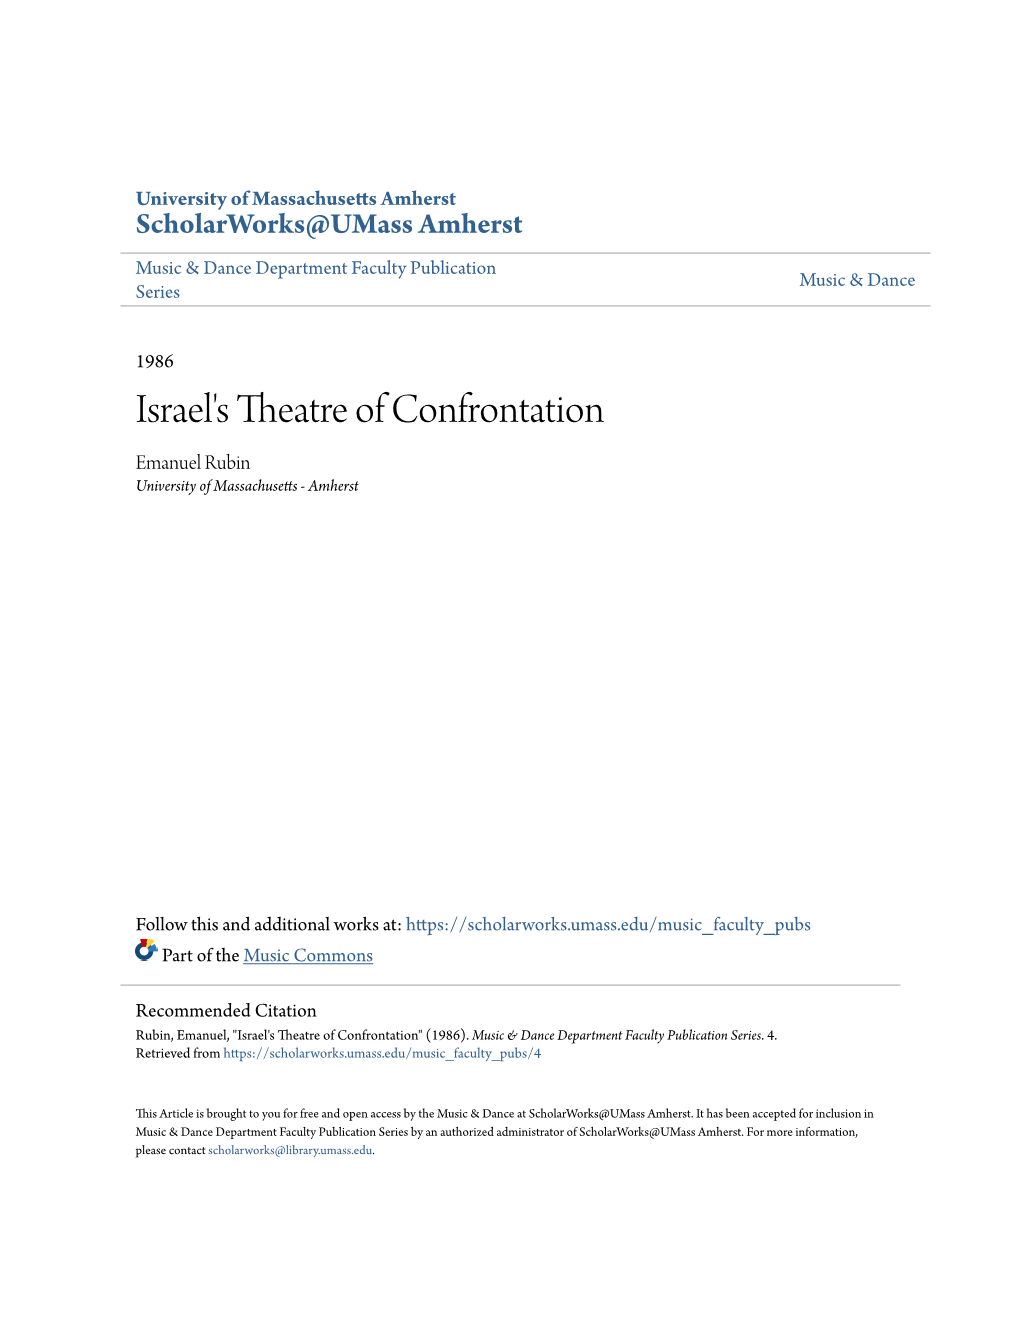 Israel's Theatre of Confrontation Emanuel Rubin University of Massachusetts - Amherst